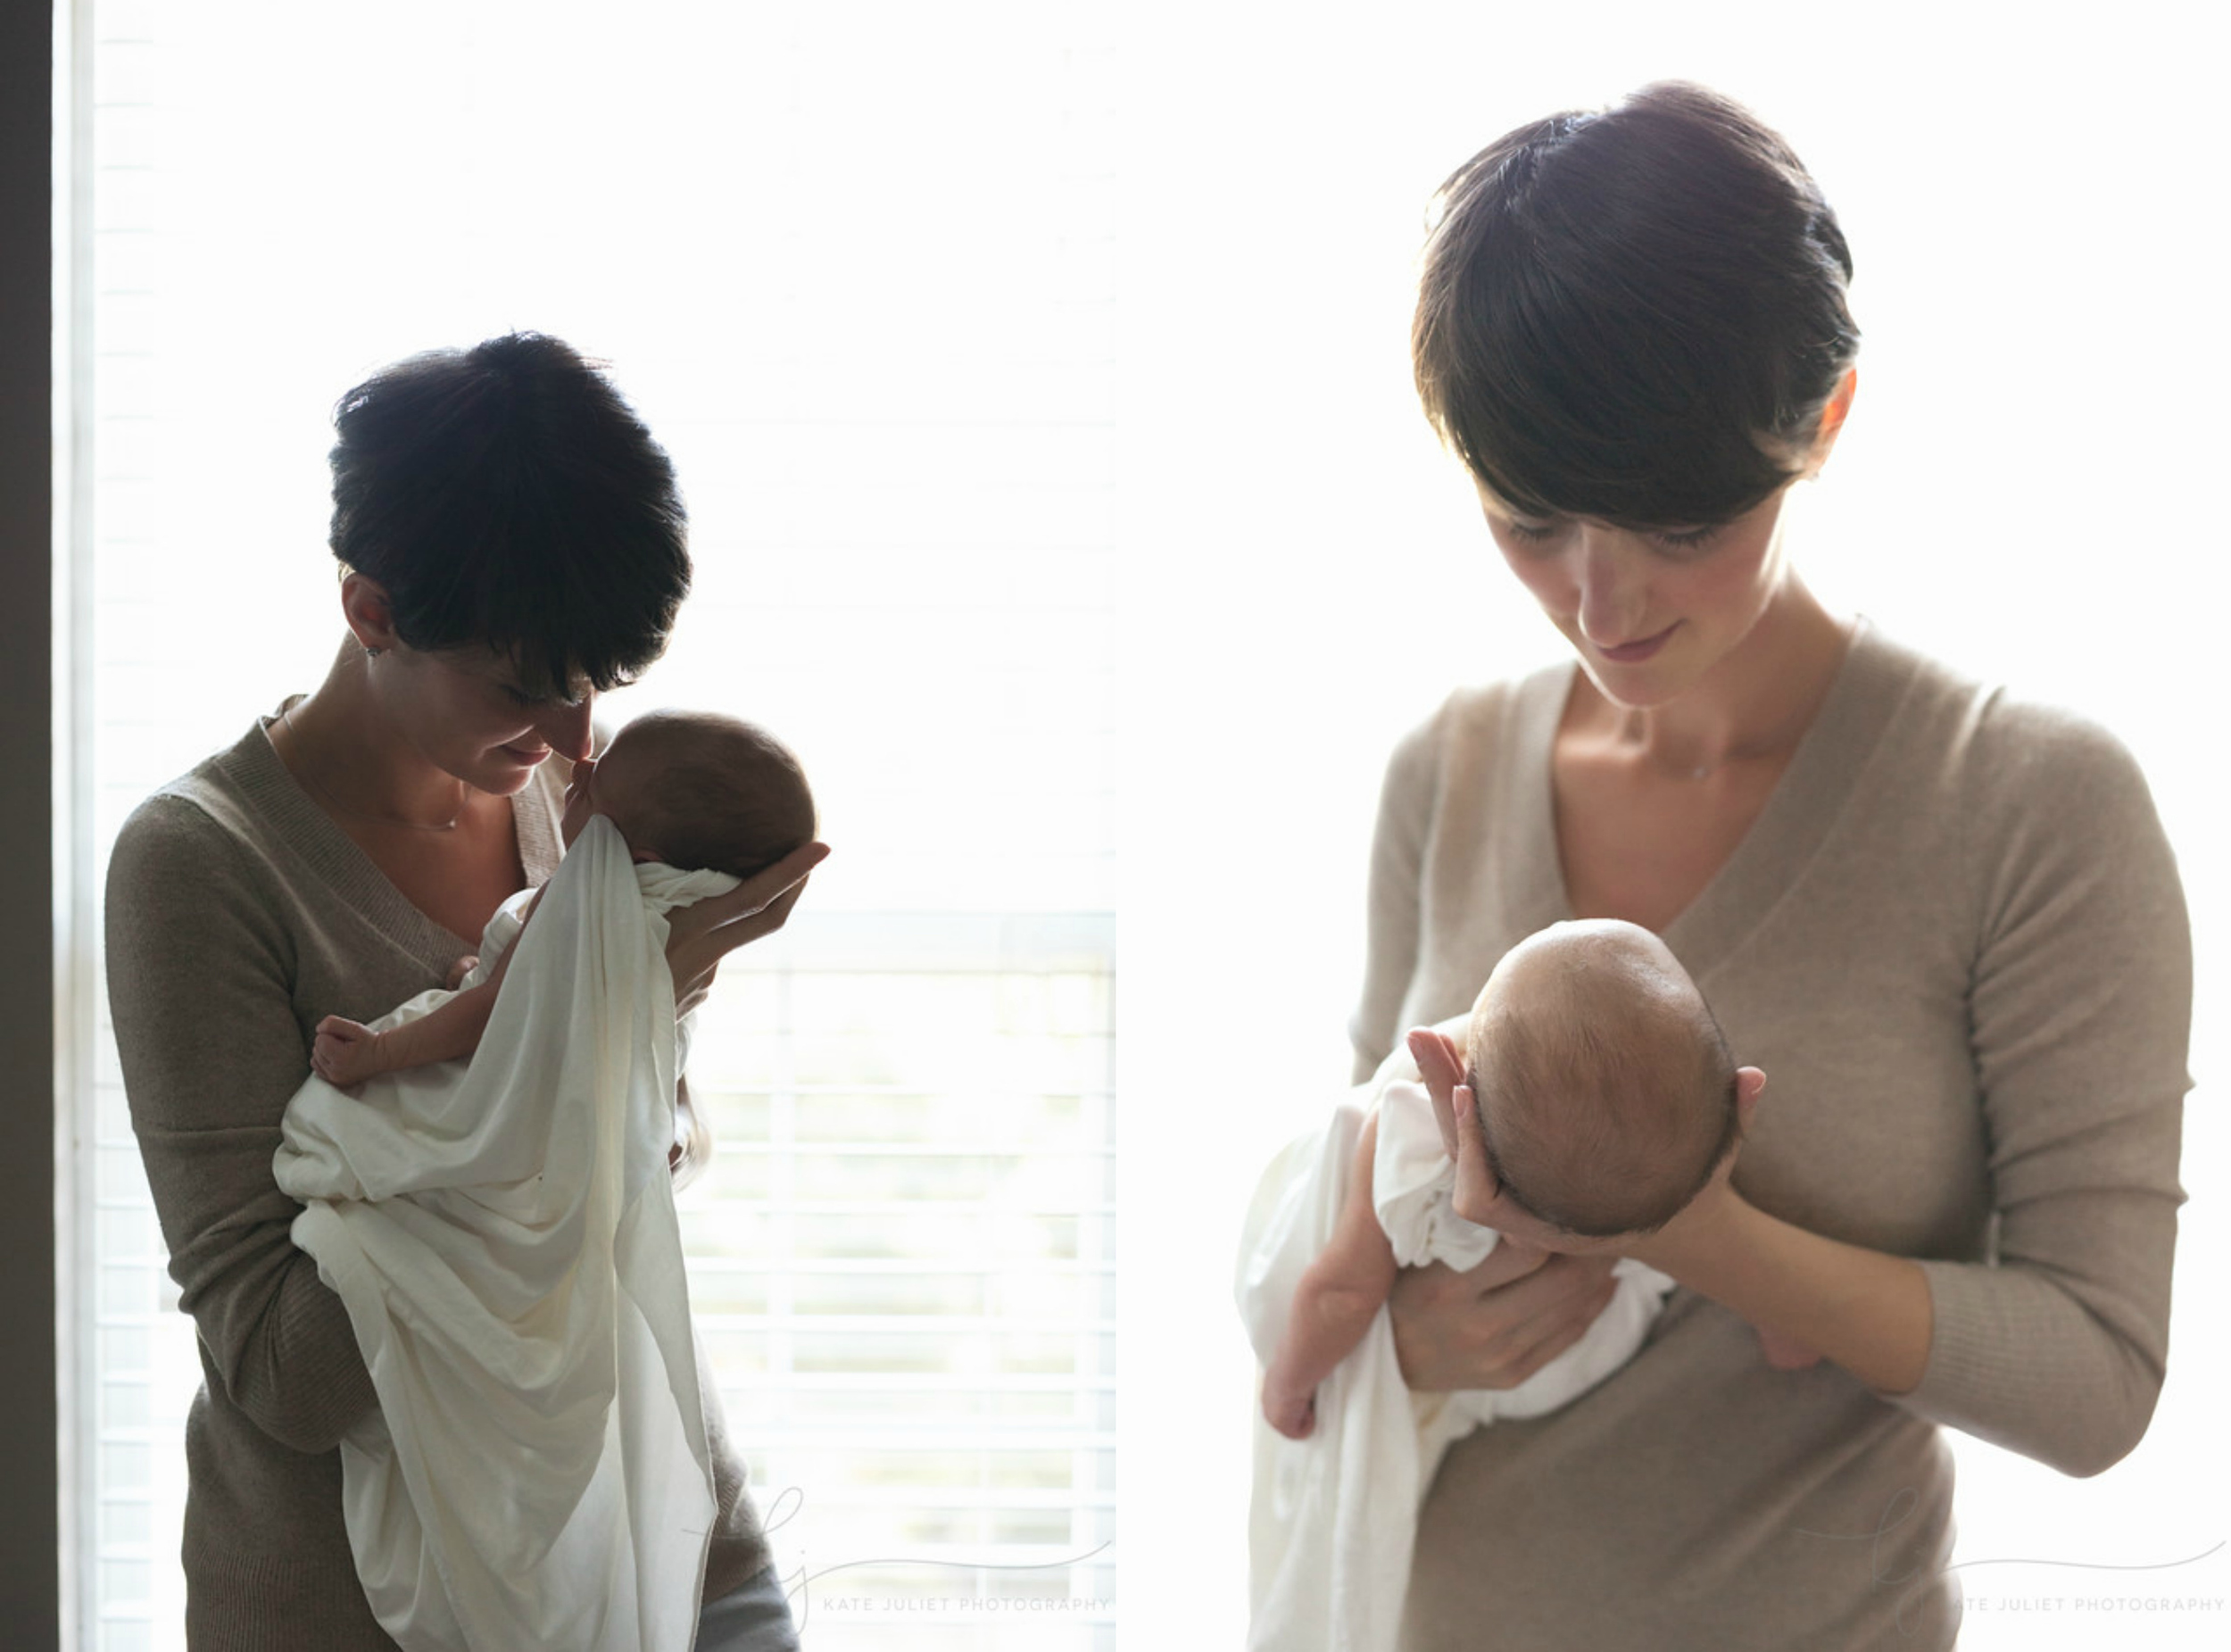 Alexandria VA Newborn Baby Boy Photographer | Kate Juliet Photography